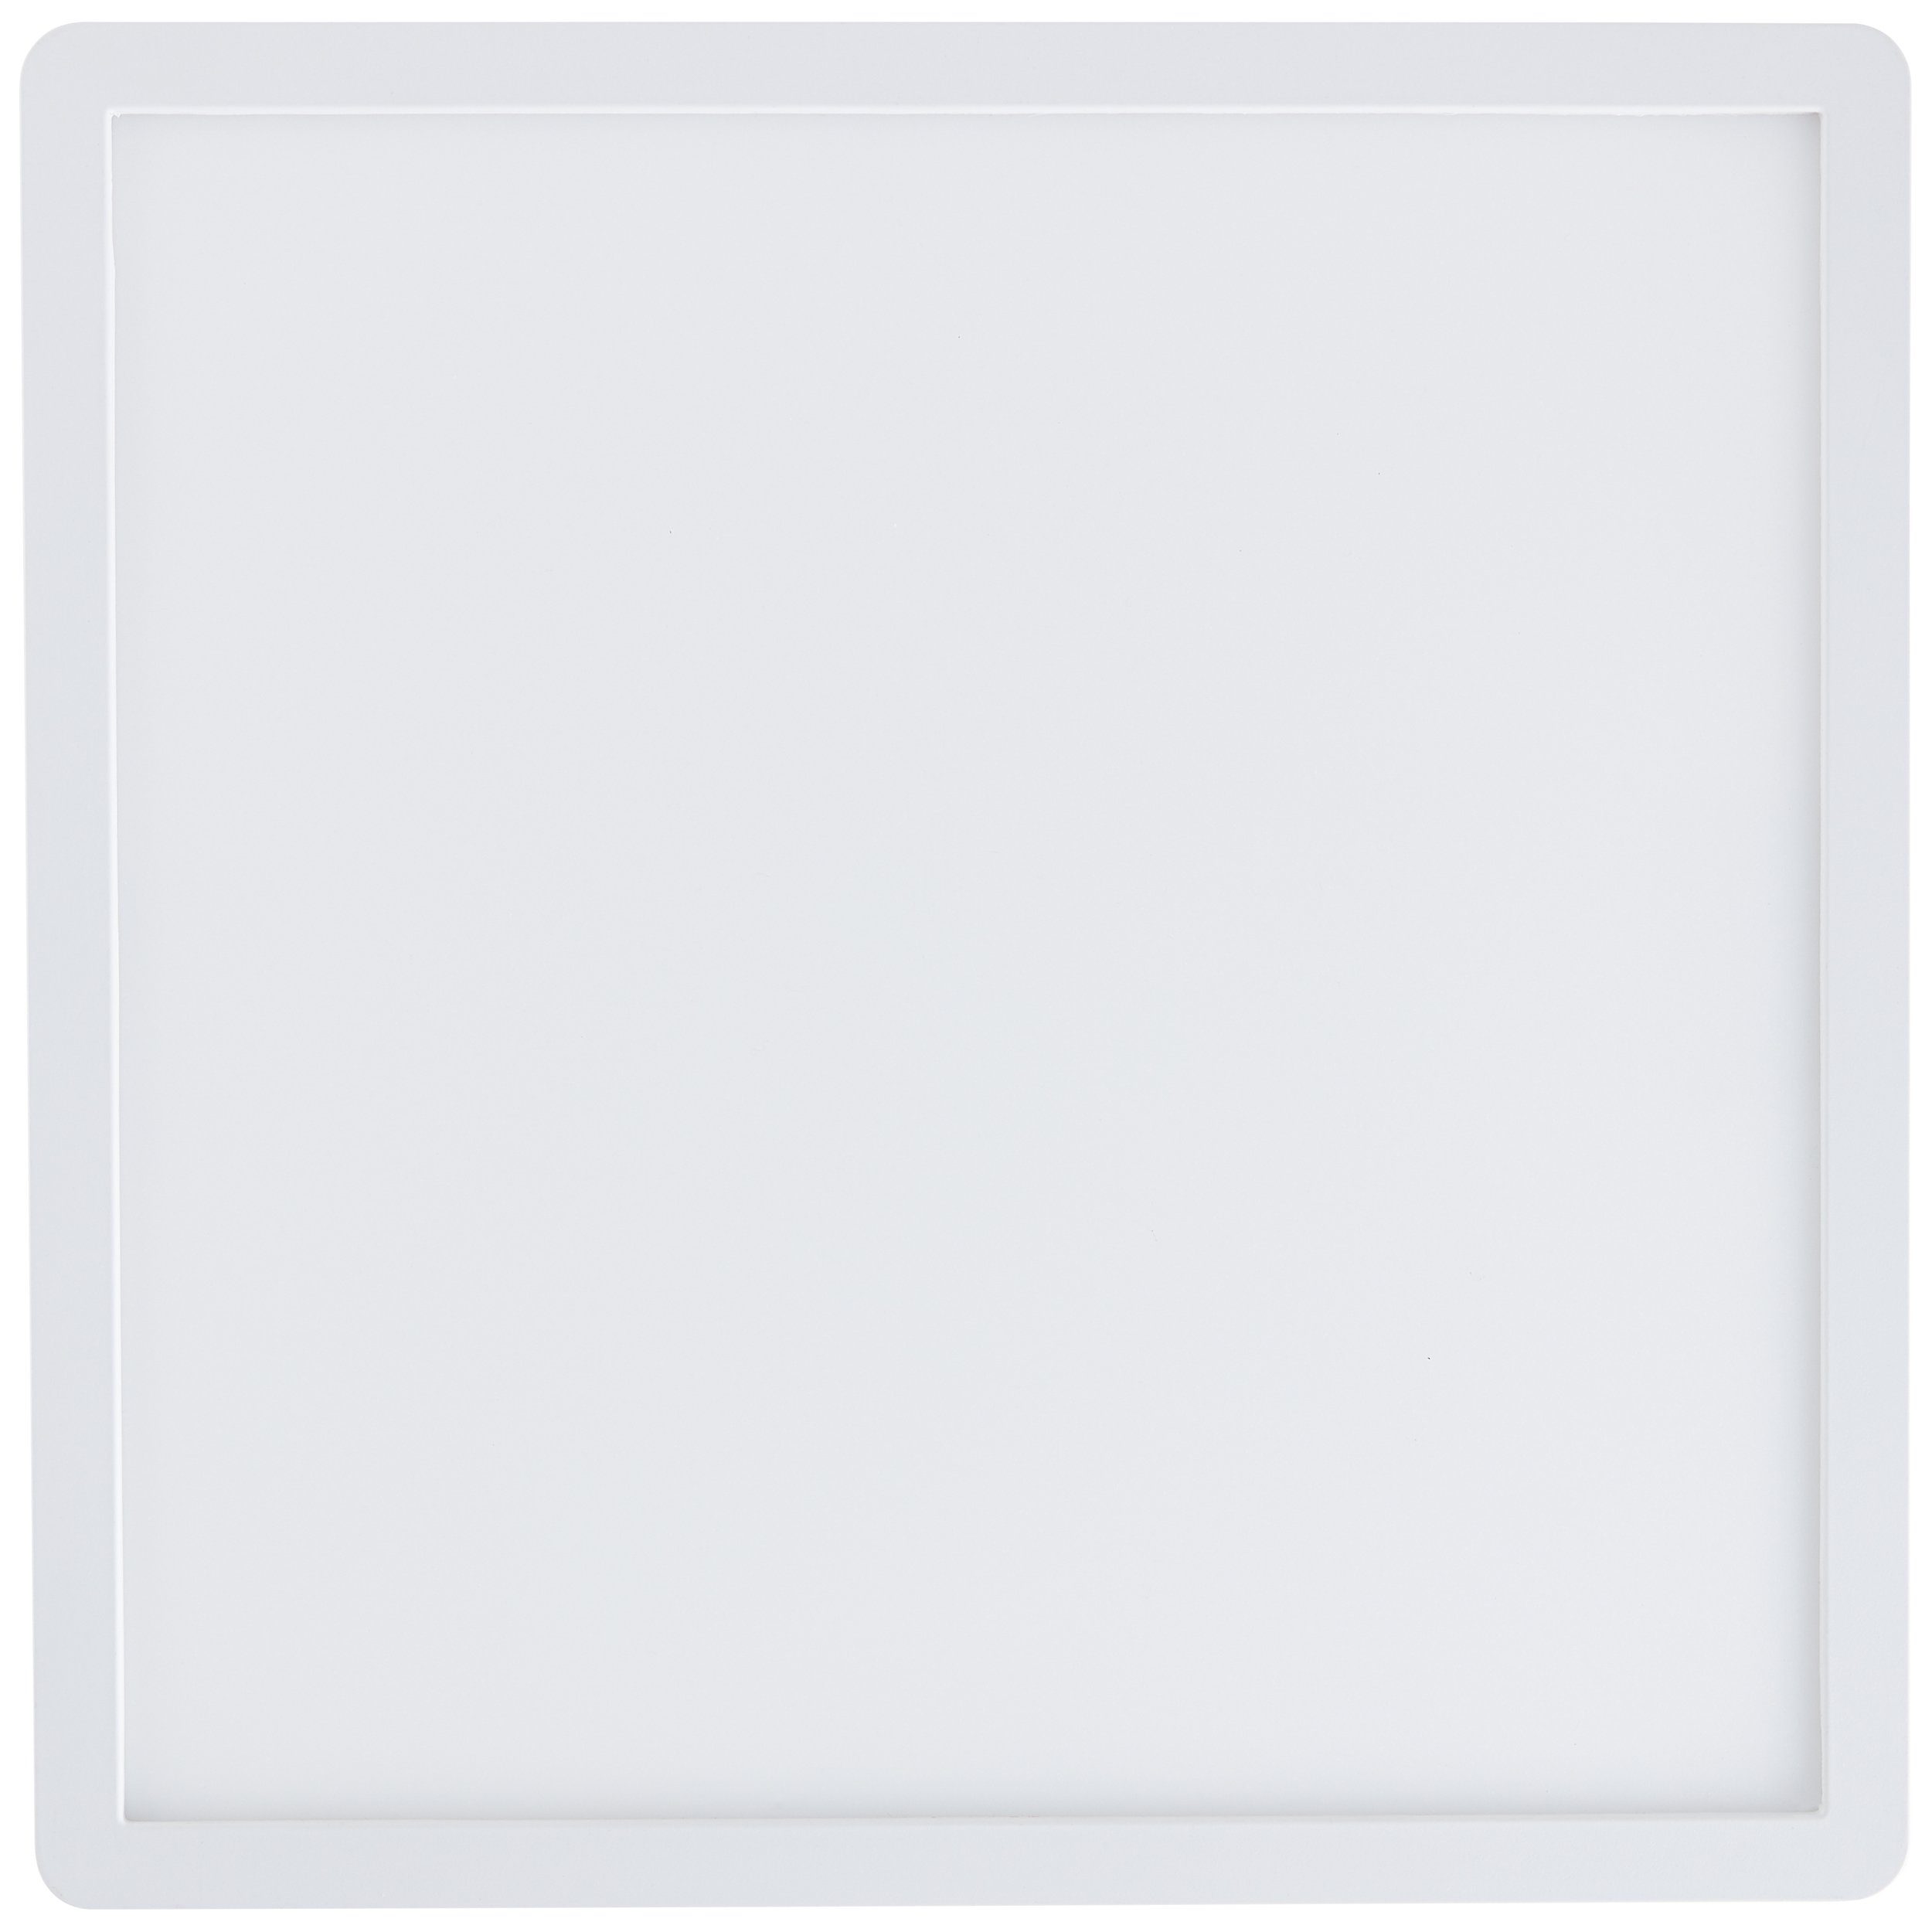 LED weiß 29x29cm Deckenaufbau-Paneel Kunststoff Deckenaufbau-Paneel Brilliant weiß, Aufbauleuchte Sorell Fernb 29x29cm LED BRE-Light Sorell